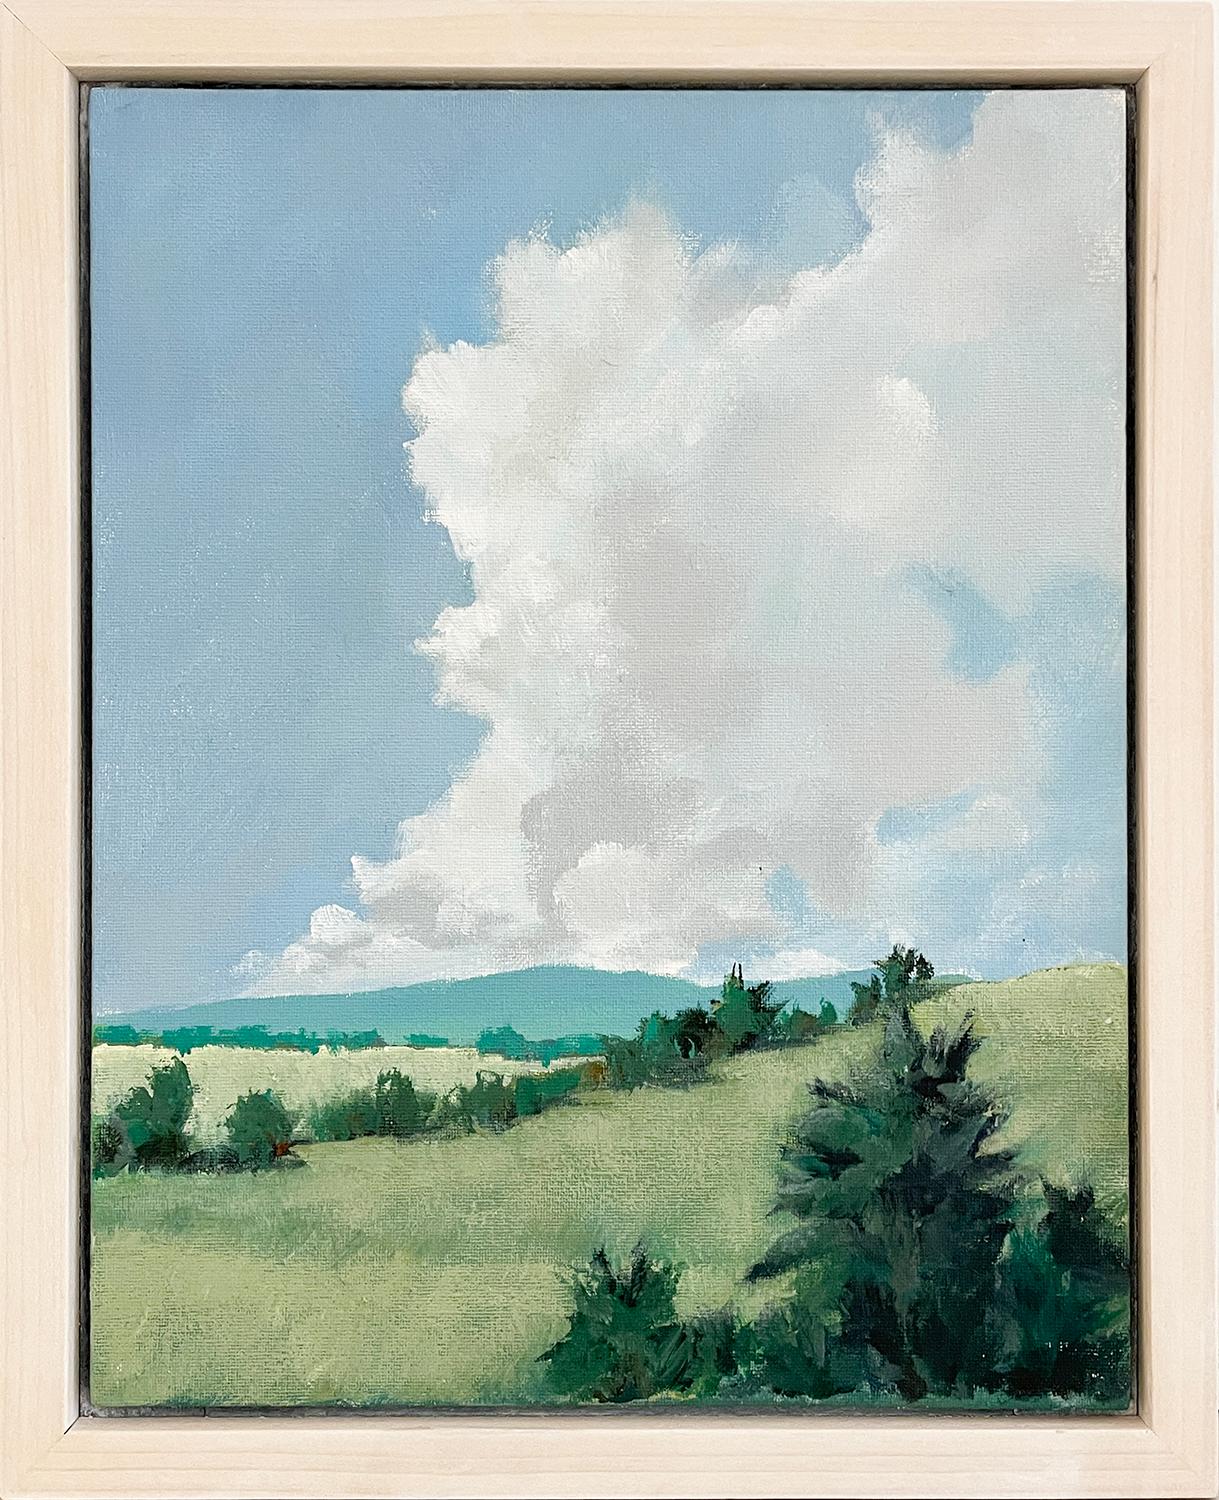 Catskills from Claverack (Plein Air Hudson Valley Landscape Painting, Framed)